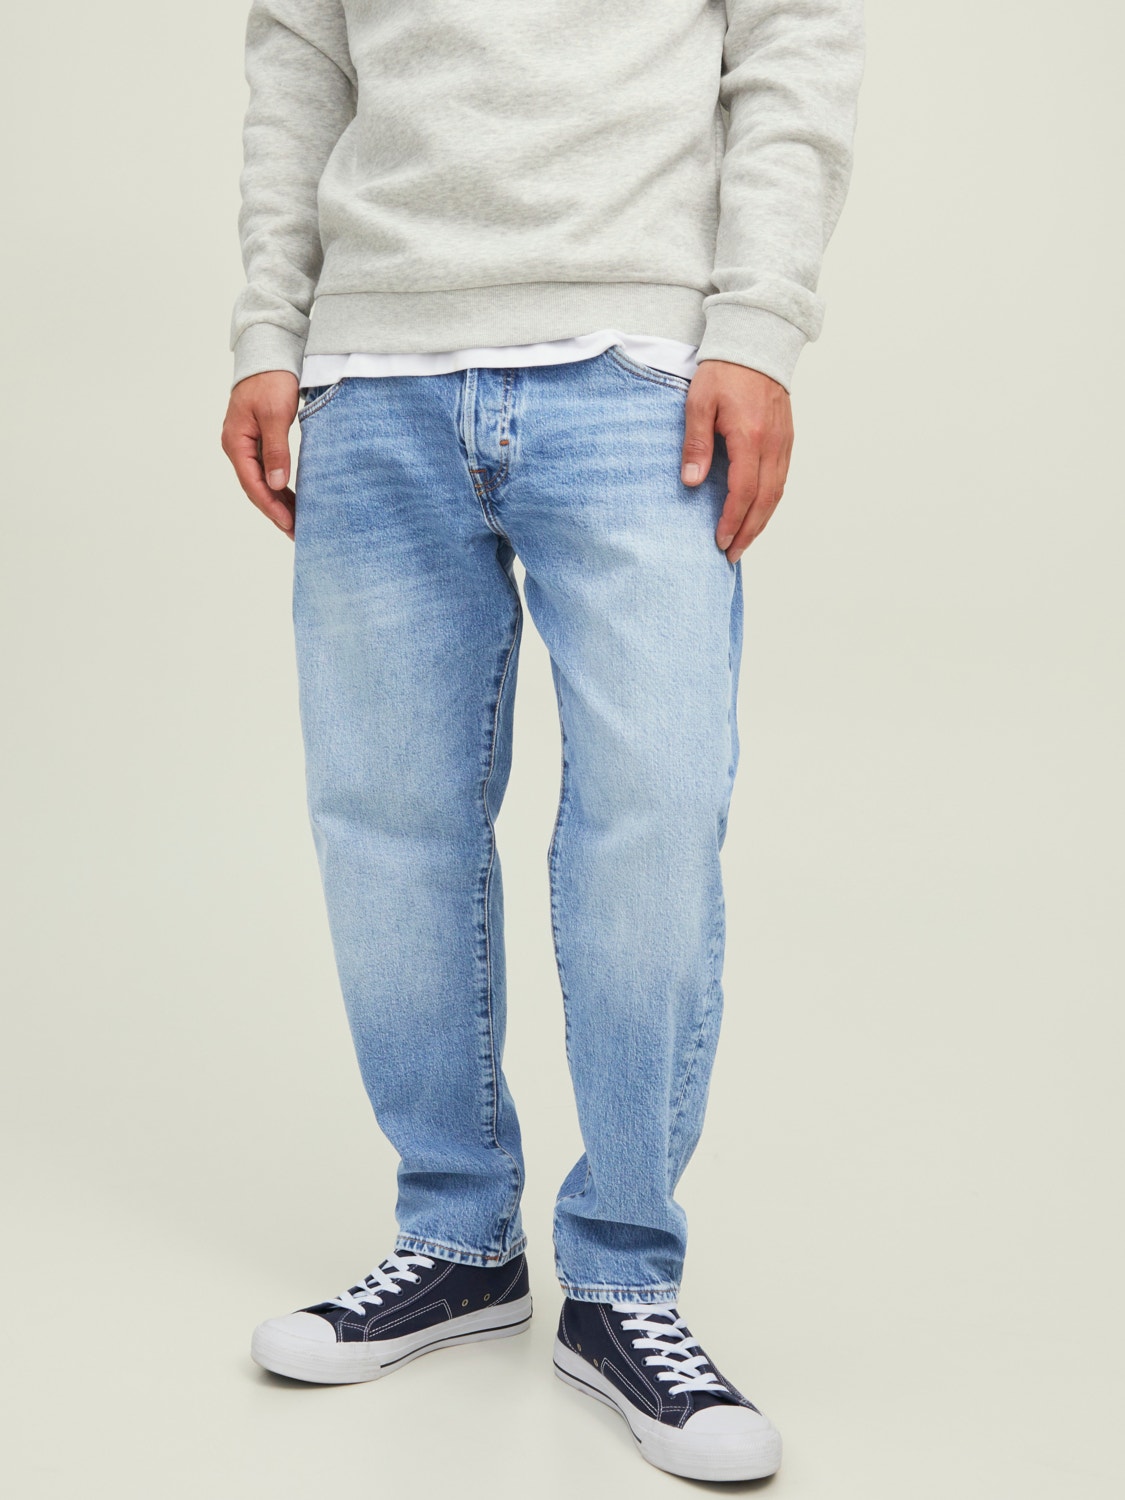 Jack & Jones Boys Super Skinny Jeans Casual Denim Pants for Kids -8Yrs to  16Yrs | eBay